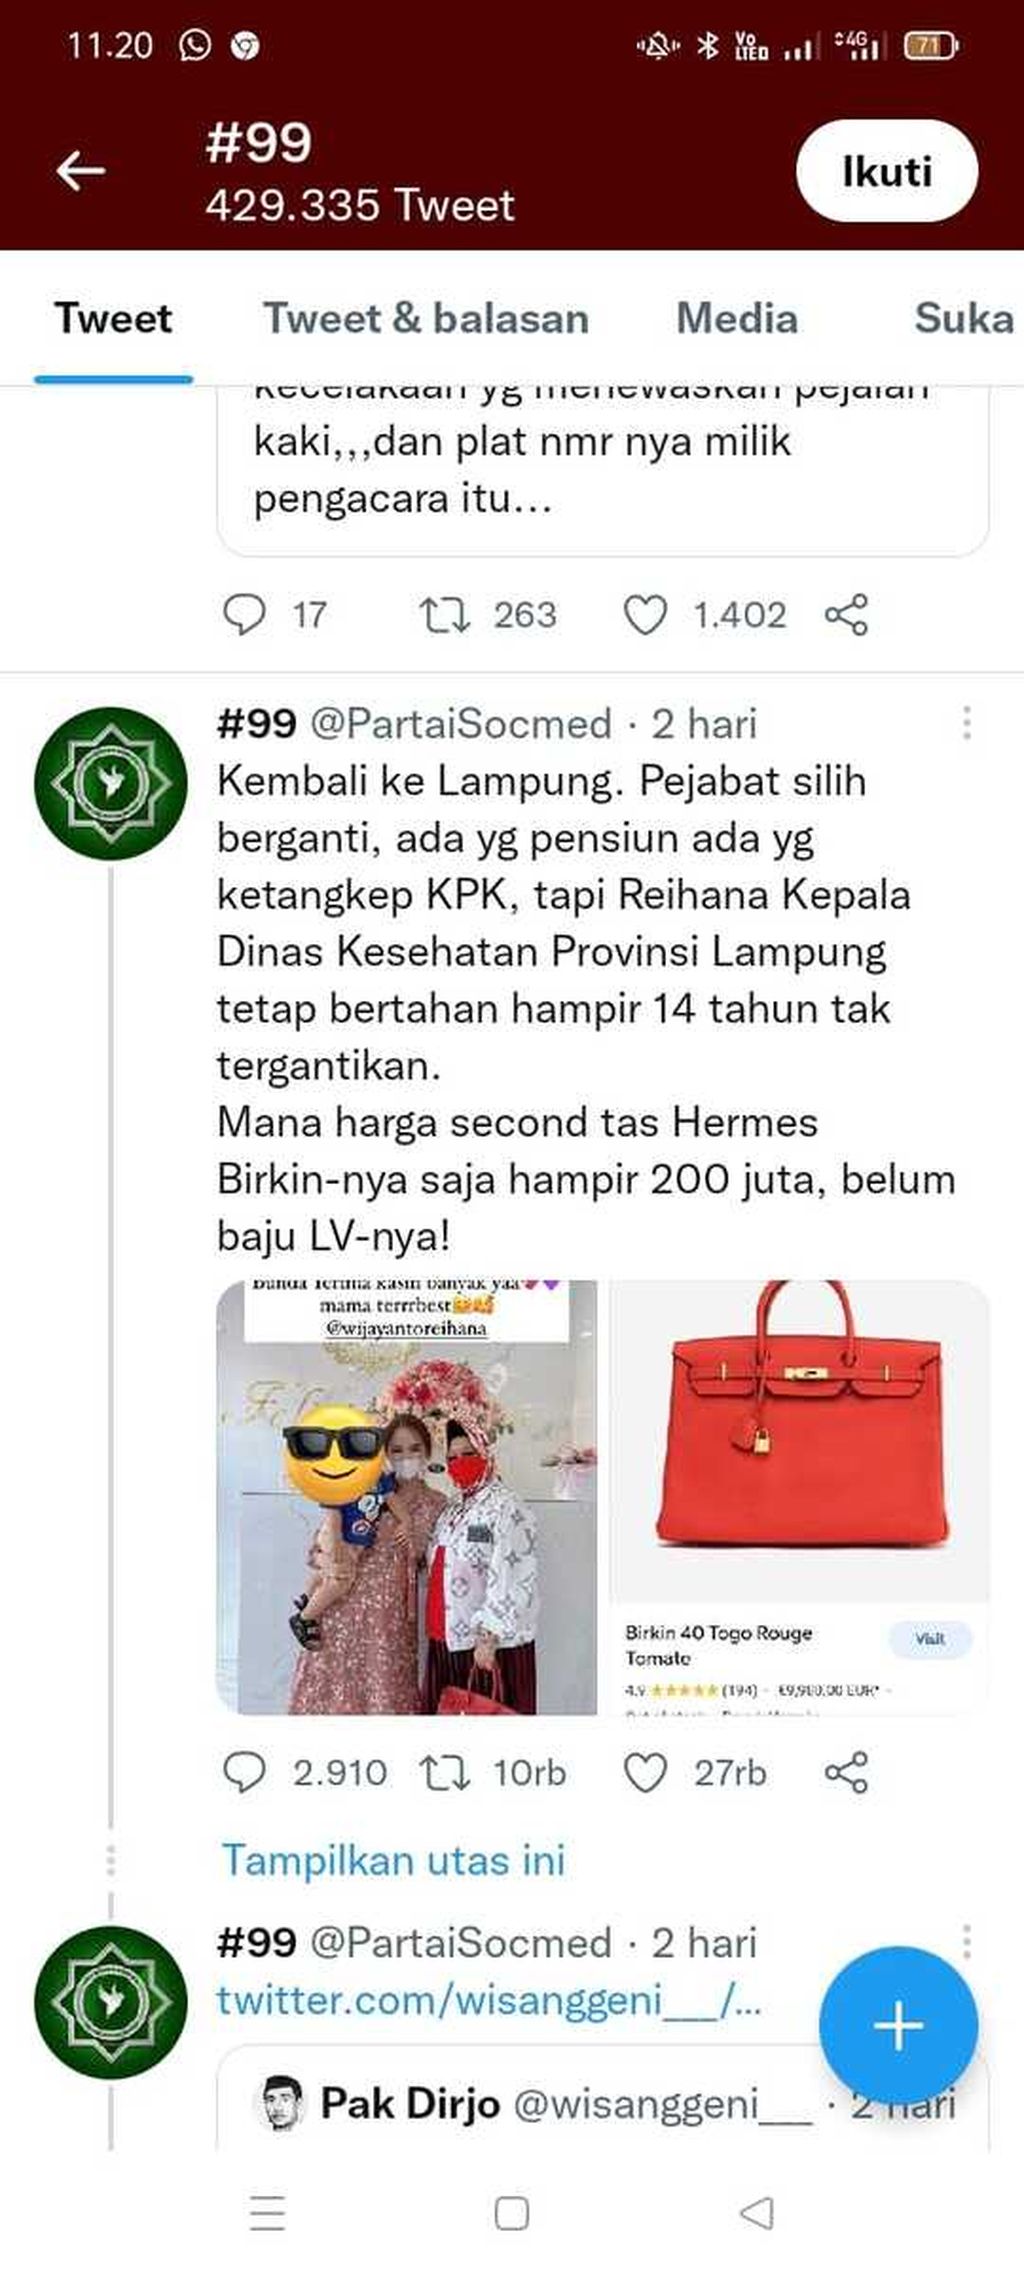 Tampilan perbincangan di Twitter terkait gaya hidup pejabat di Provinsi Lampung. 